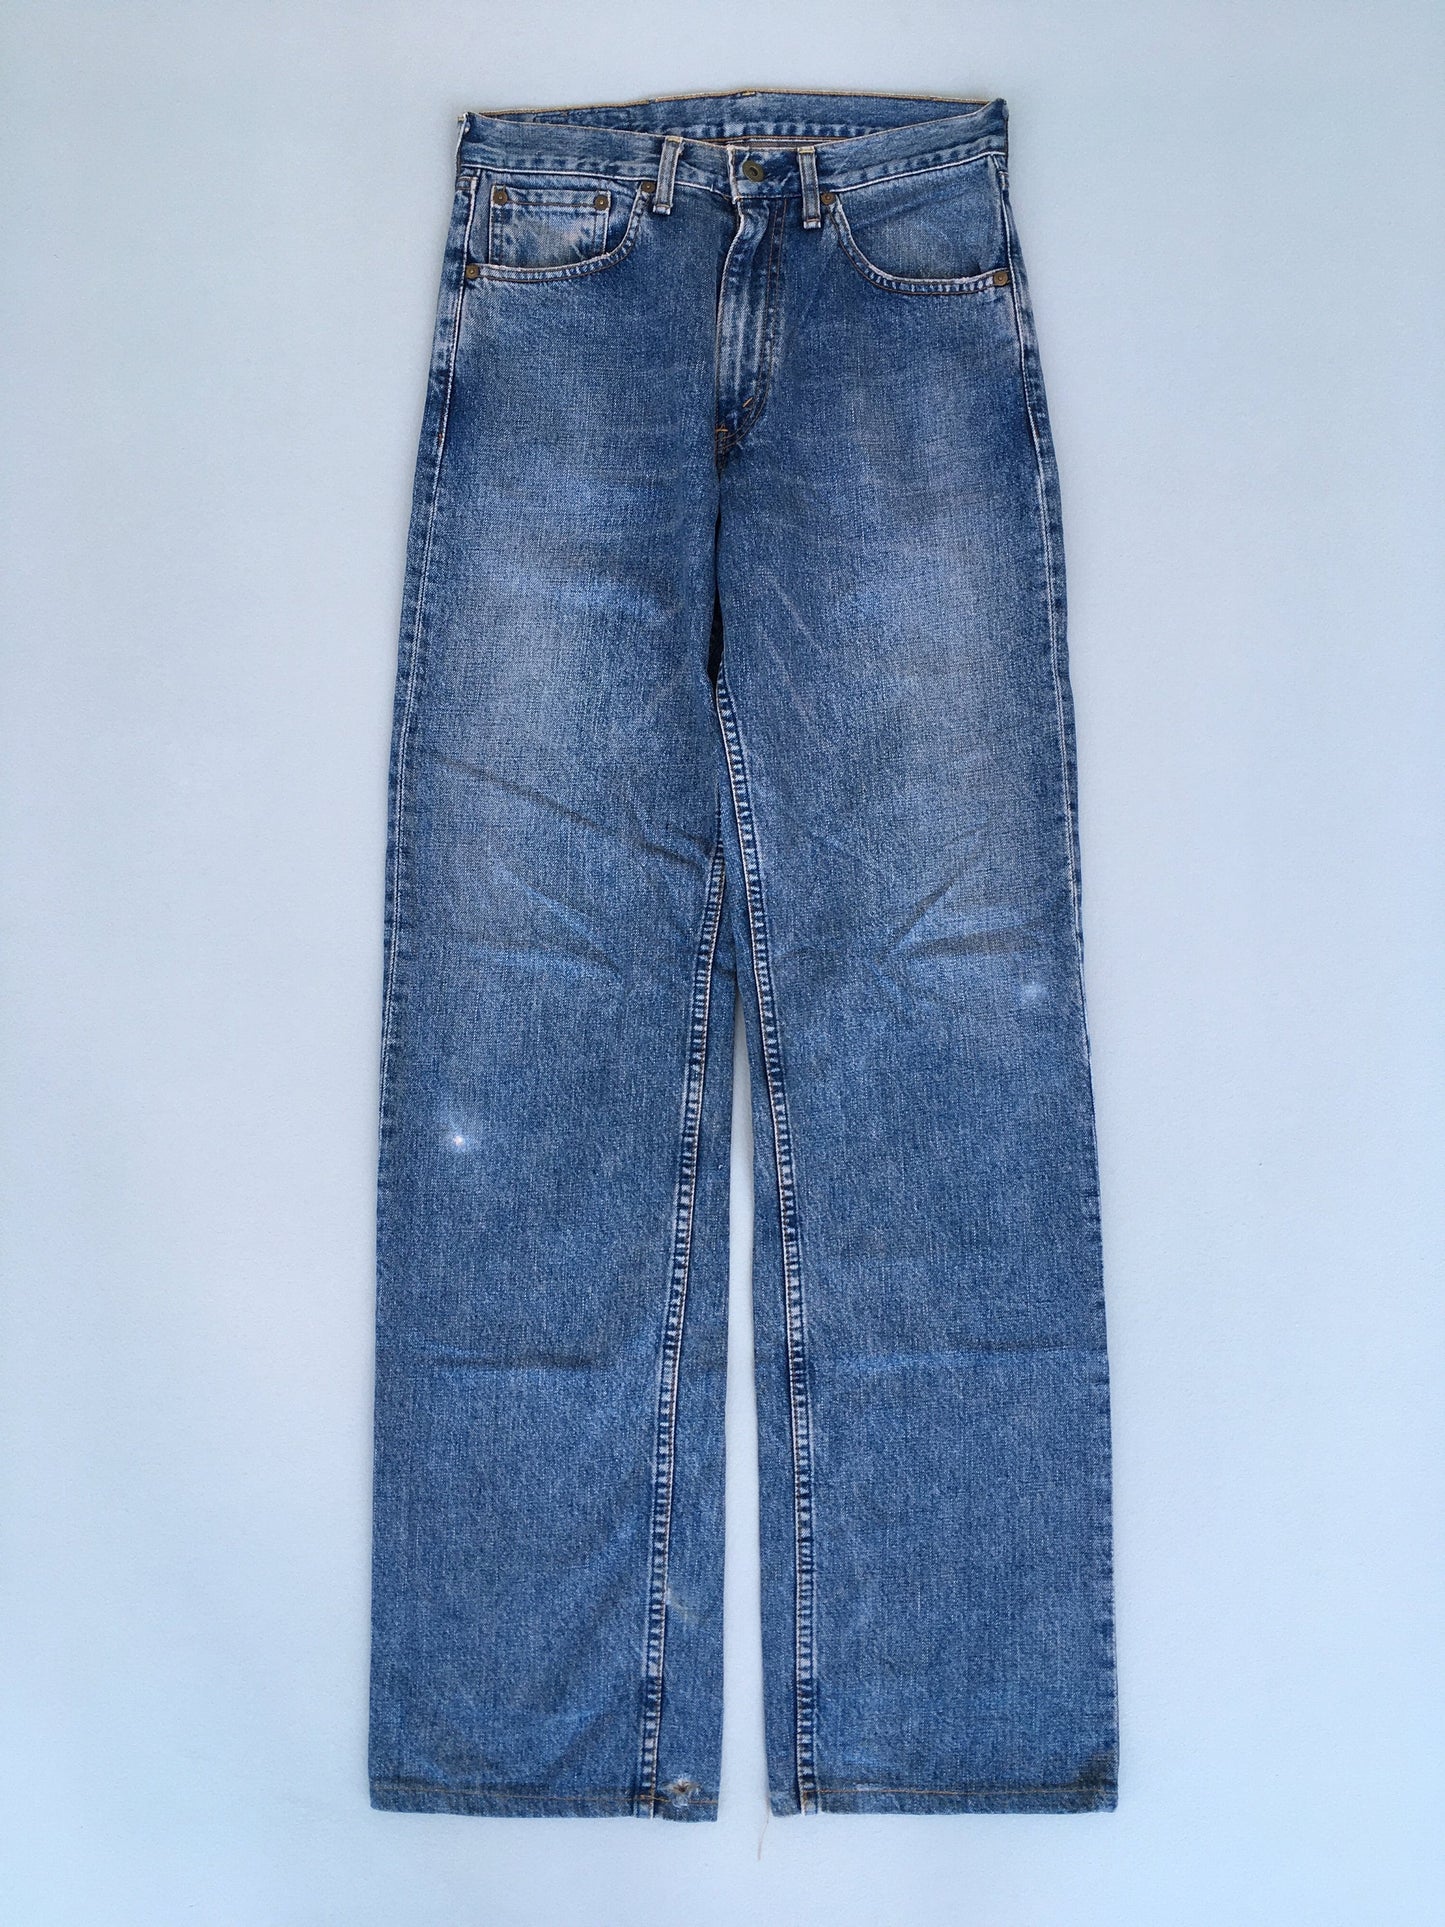 Size 30x35 Levis 504 Japan Light Washed Jeans